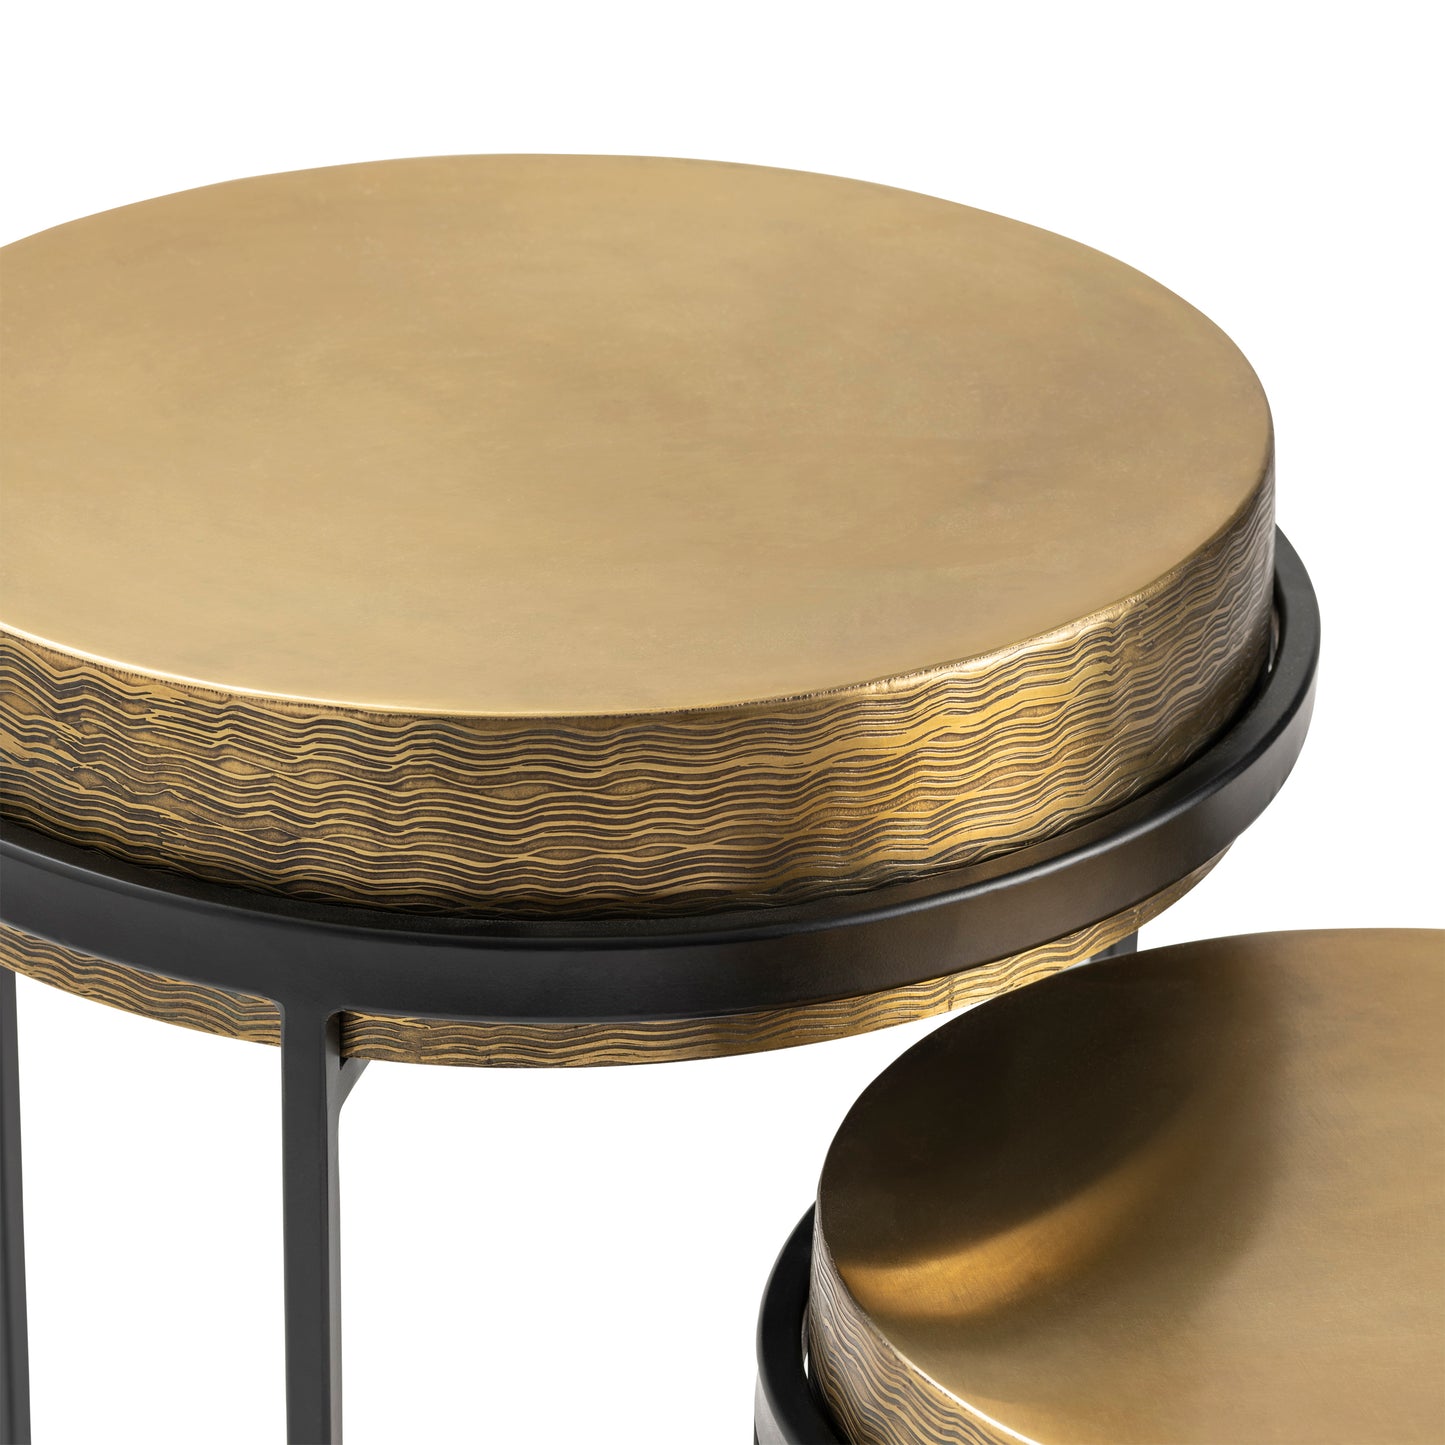 Hudson textured brass nesting Tables